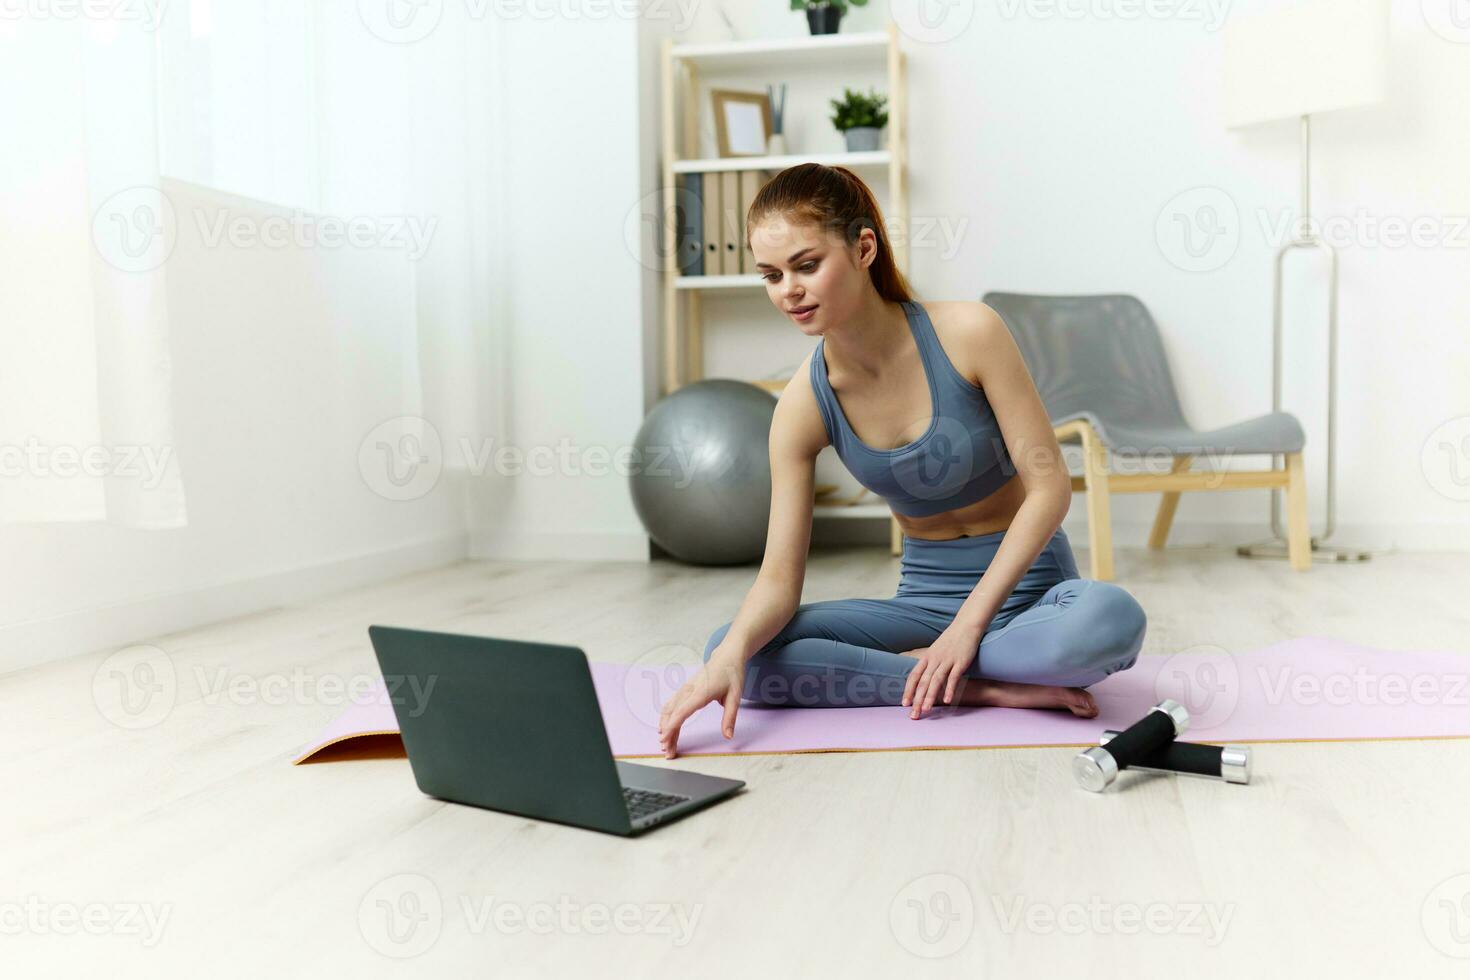 woman video lotus home training yoga mat lifestyle female health laptop photo